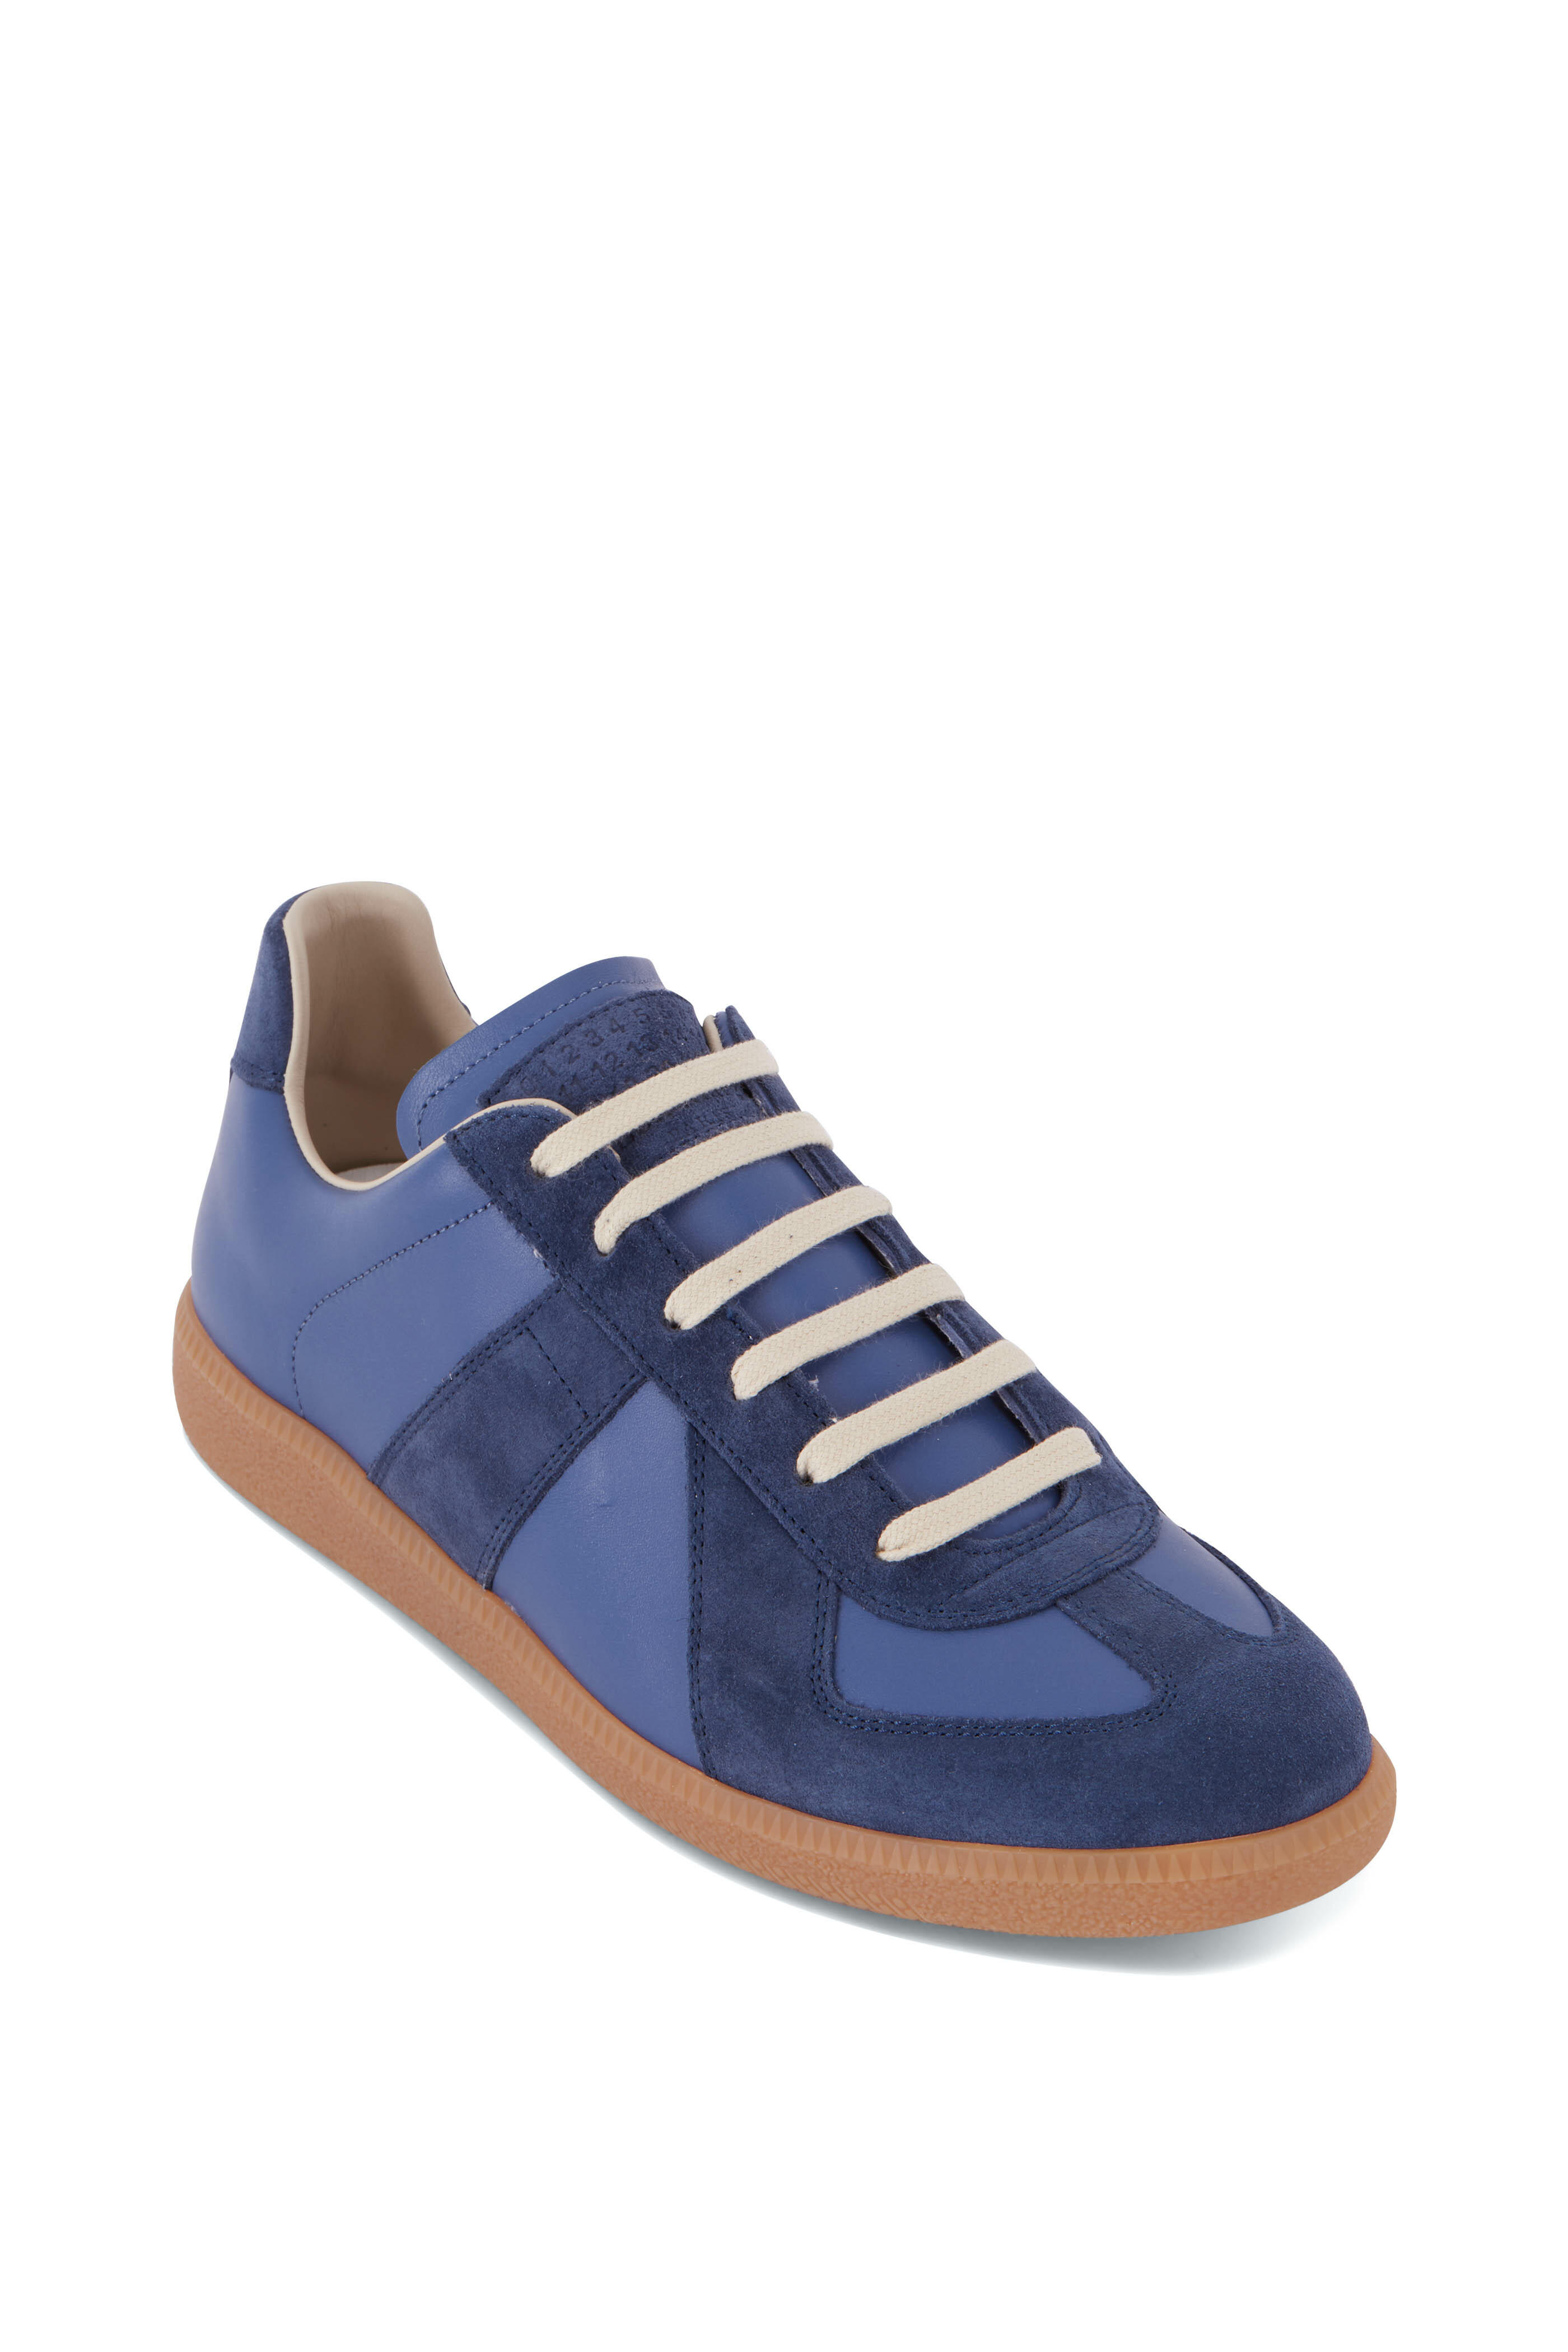 Maison Margiela - Replica Blue Leather Low Top Sneaker